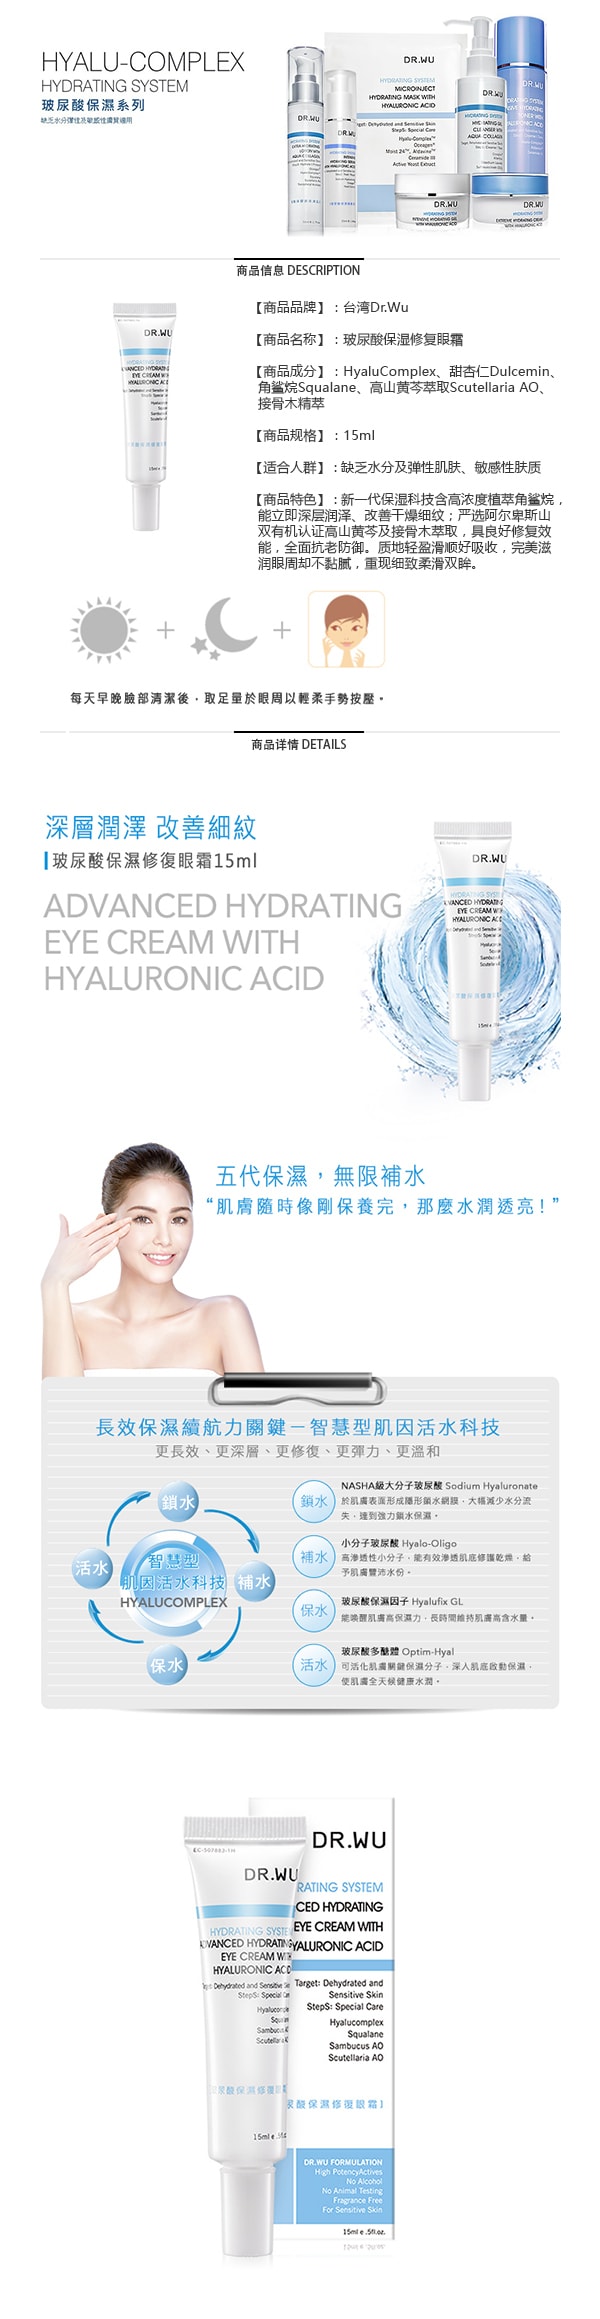 Advanced Hydrating Eye Cream With Hyaluronic Acid 15ml